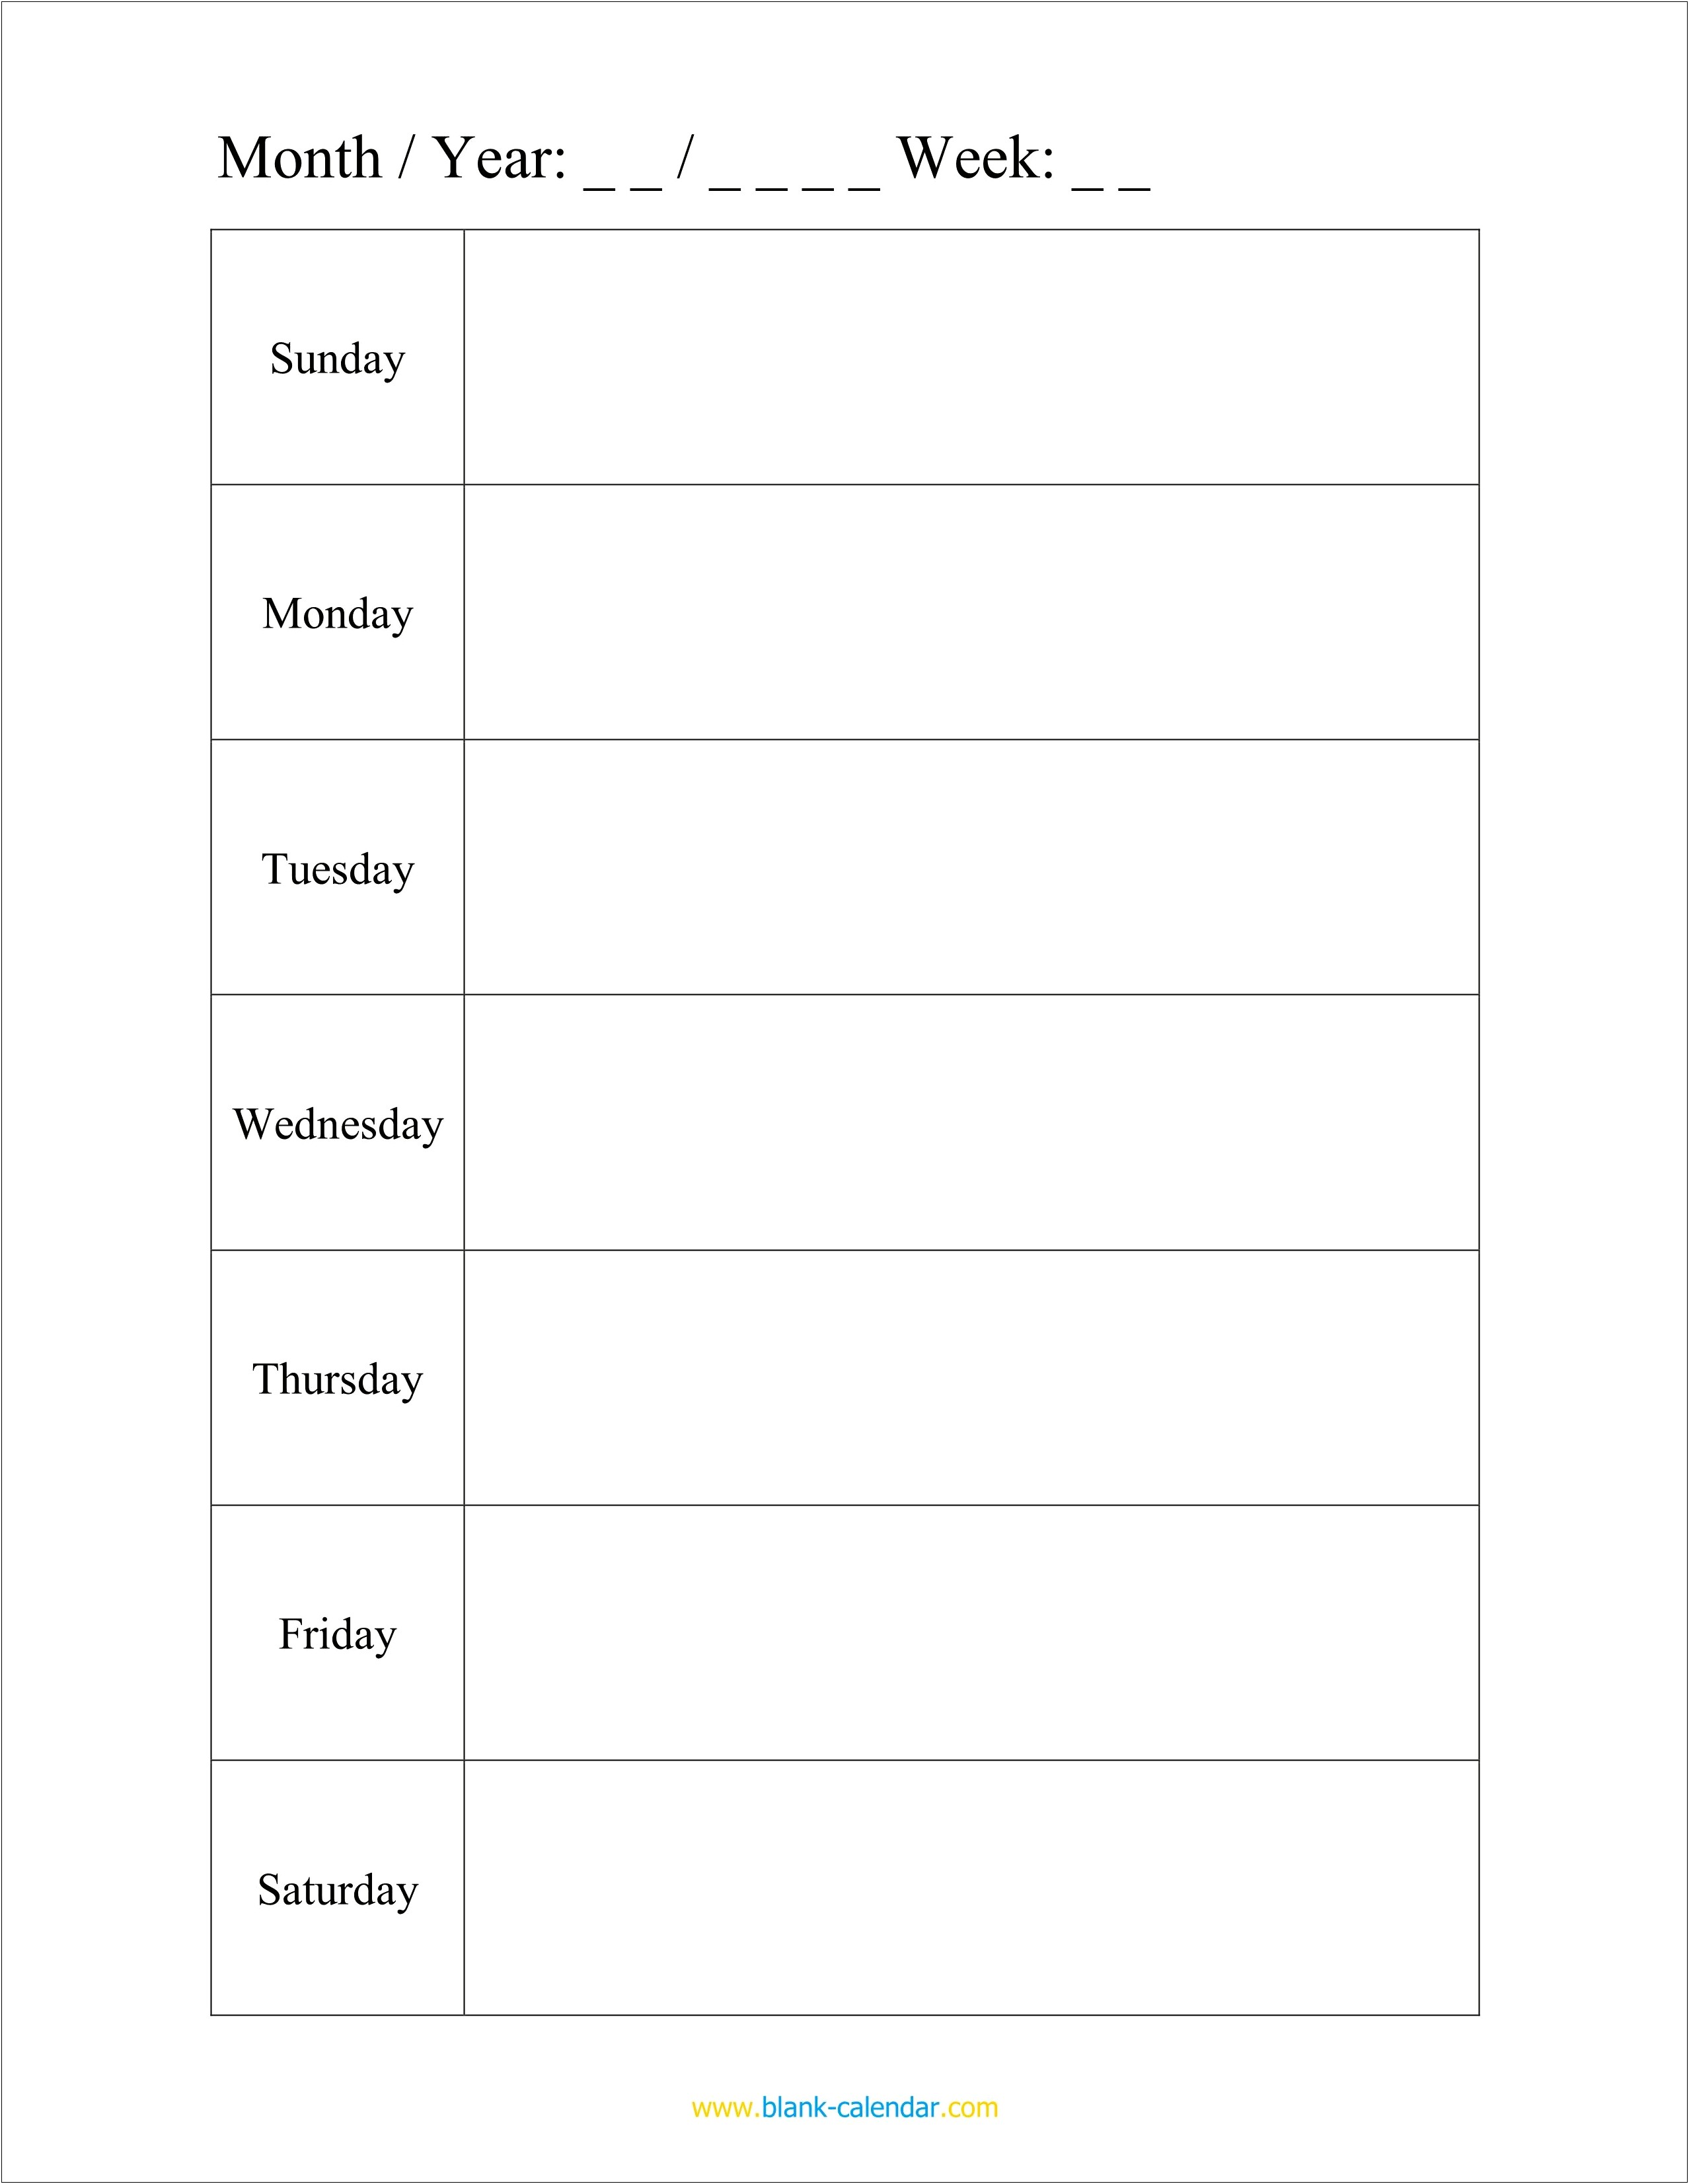 Blank Weekly Calendar Template Word Monday Through Suday